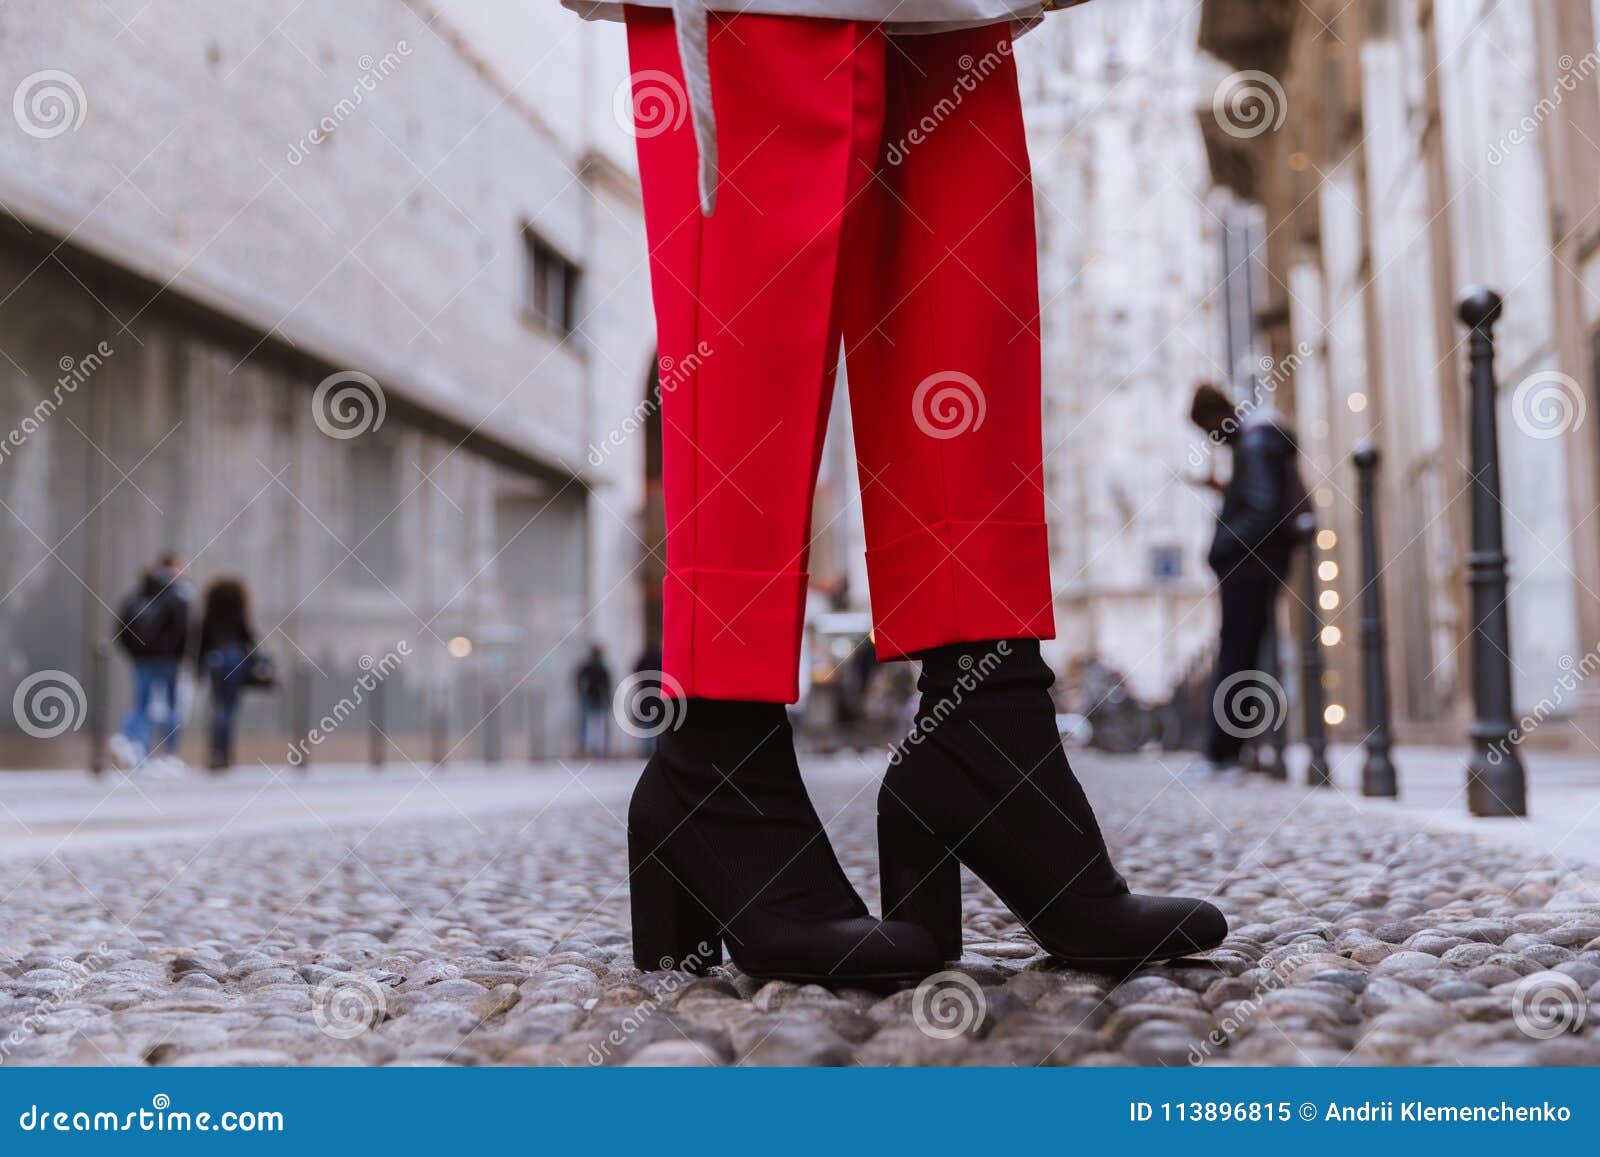 Close Up of Black Women S Boot Socks on the Italian Street. Stock Image ...